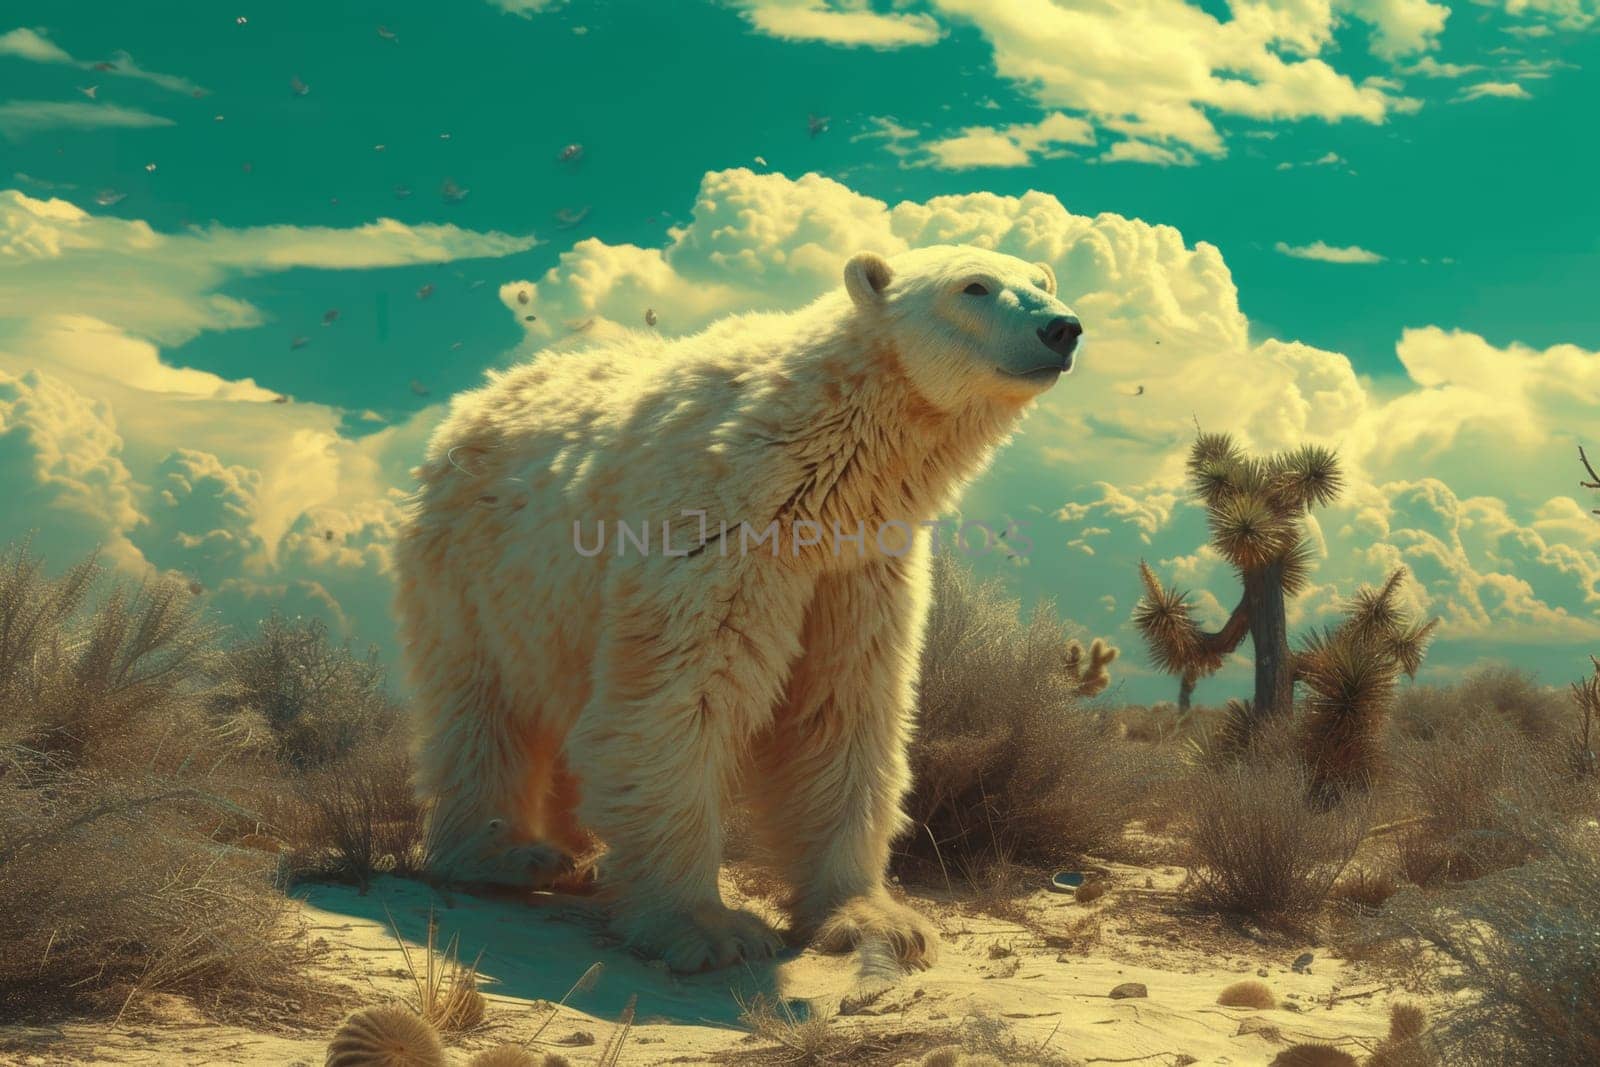 A polar bear walking through an arid desert, the concept of climate change.